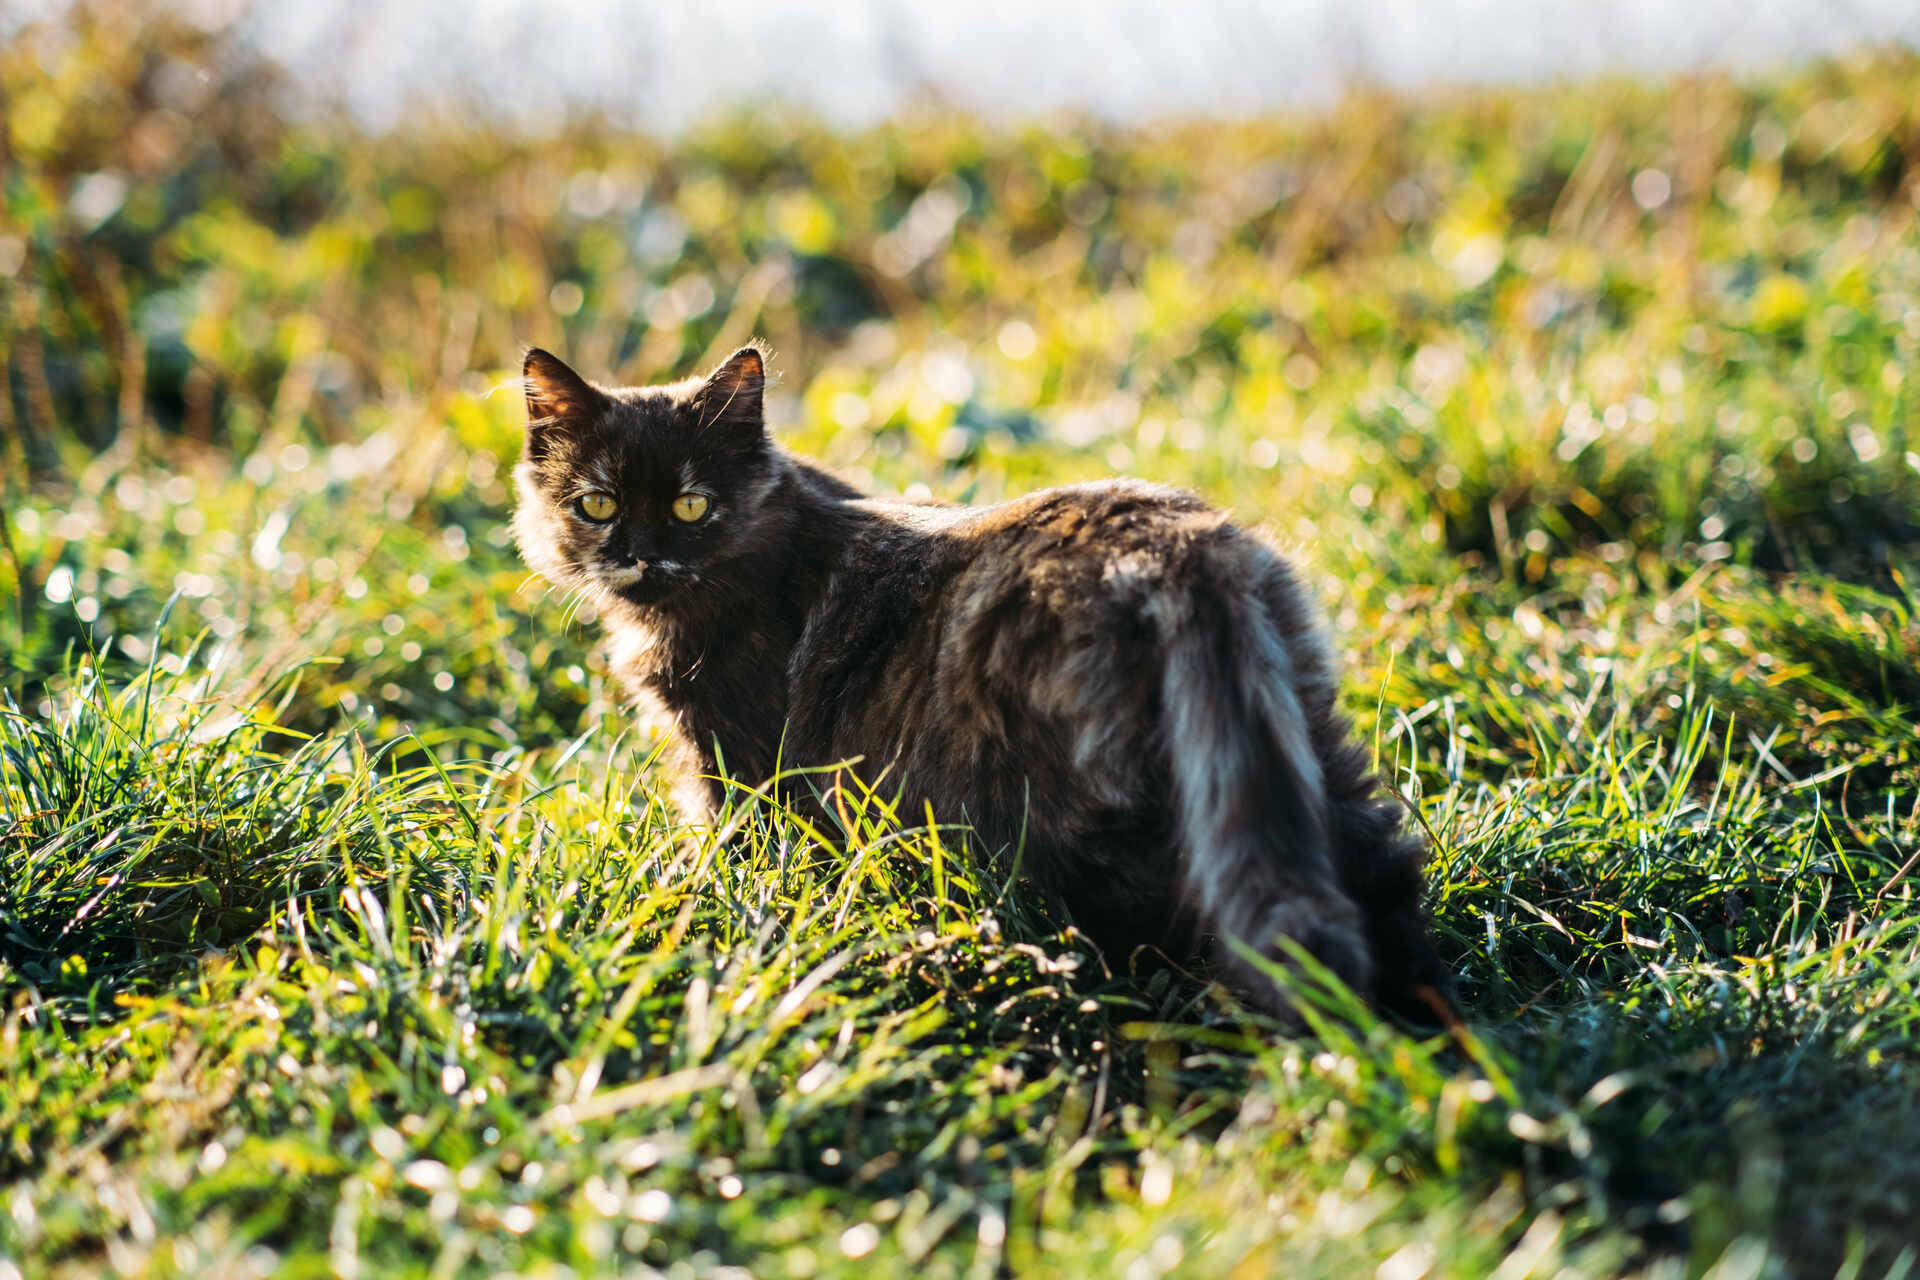 An outdoor cat in a field 